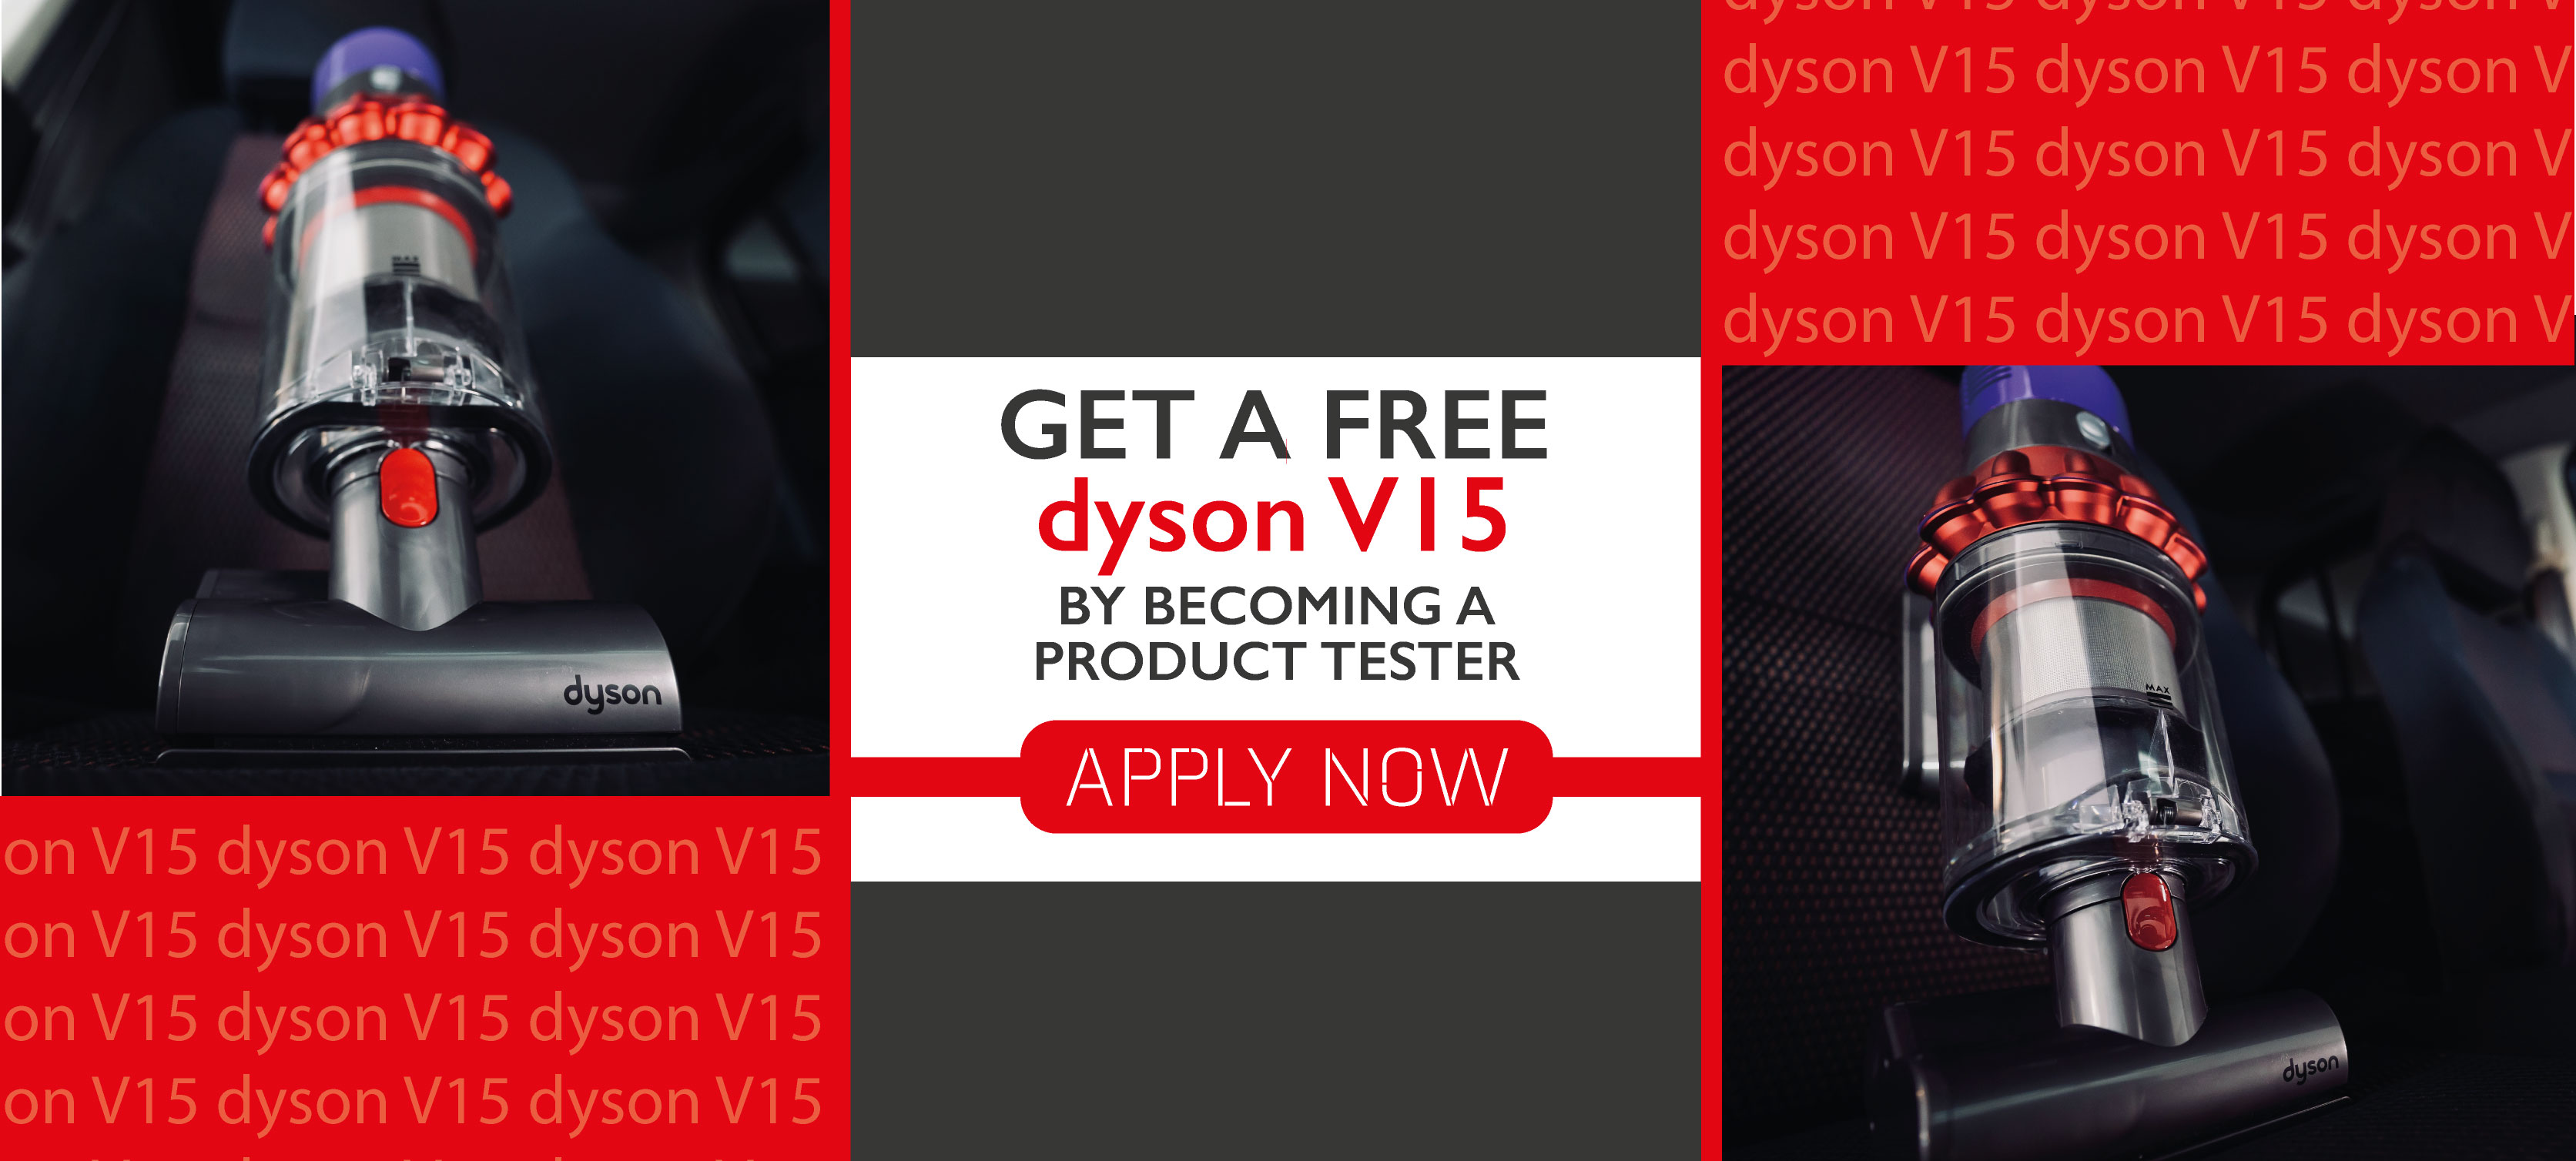 Review a Dyson V15